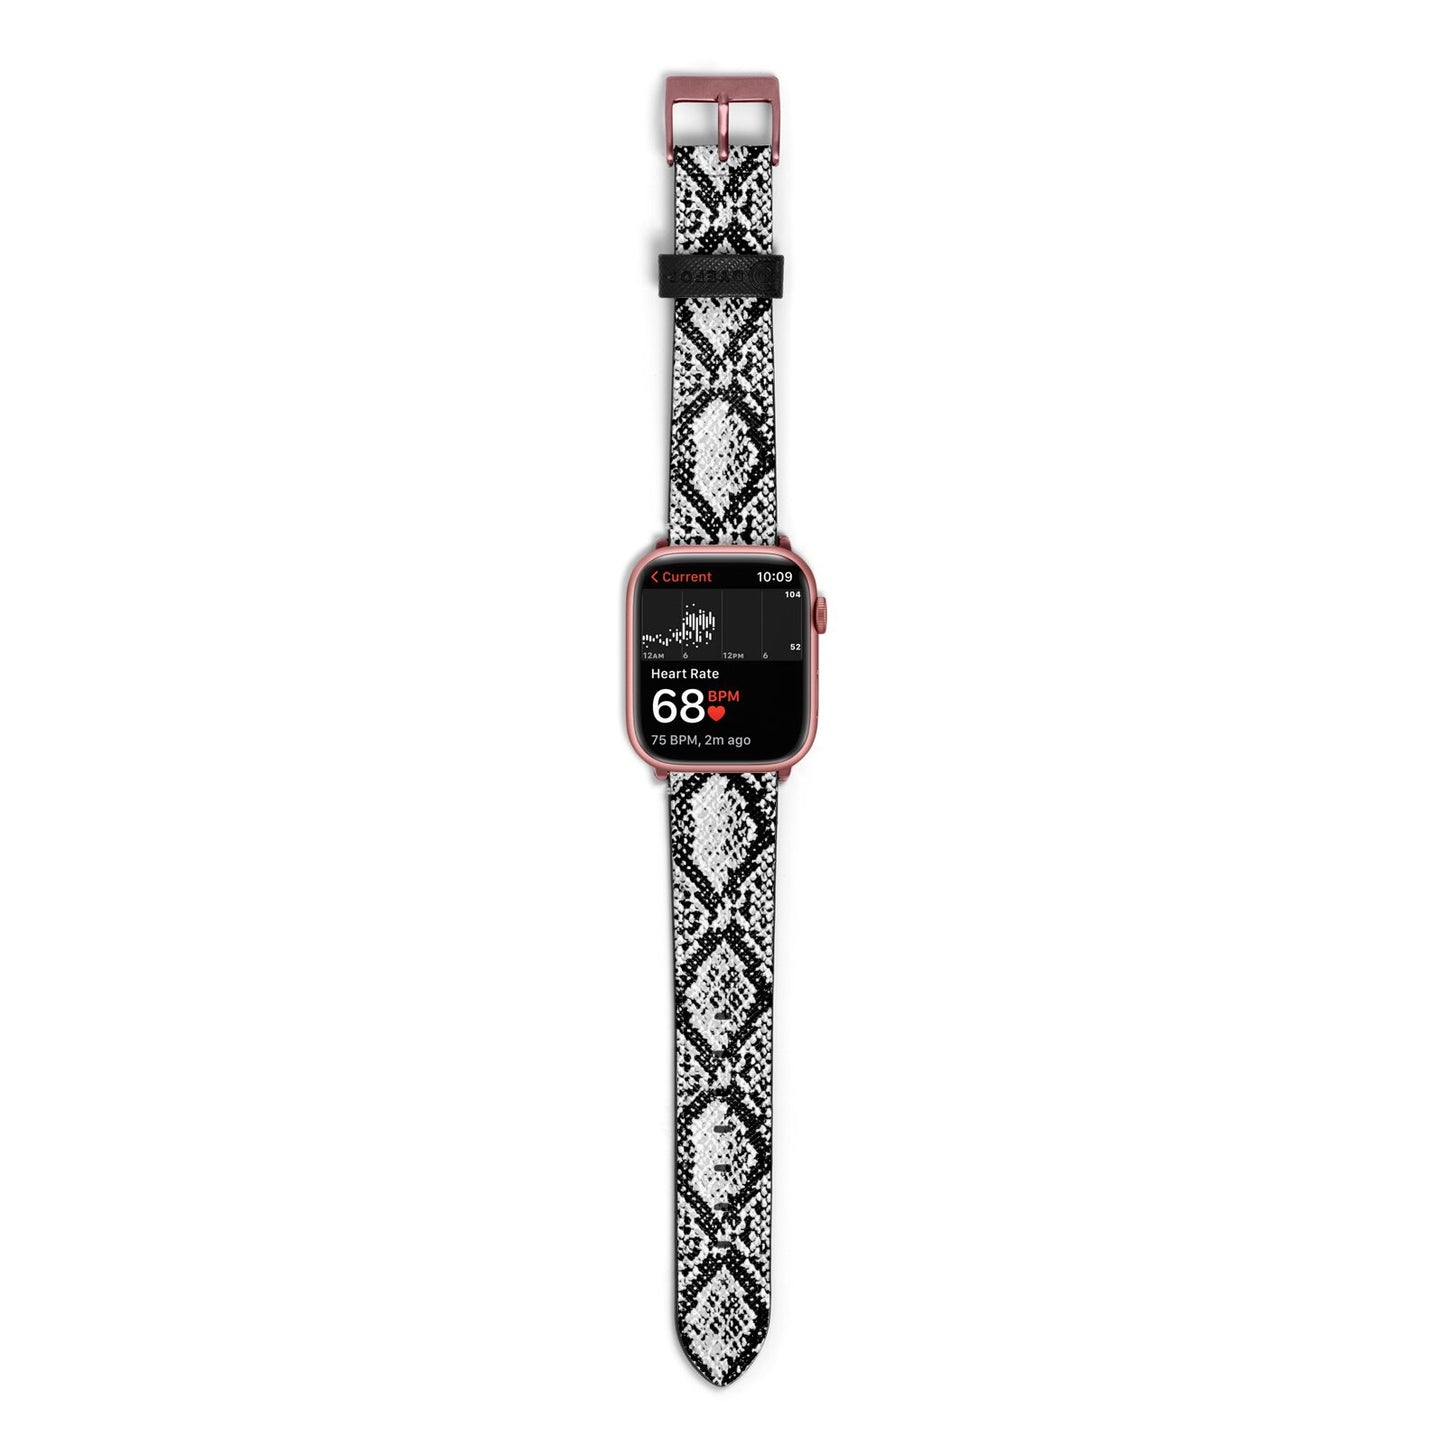 Black Snakeskin Apple Watch Strap Size 38mm with Rose Gold Hardware